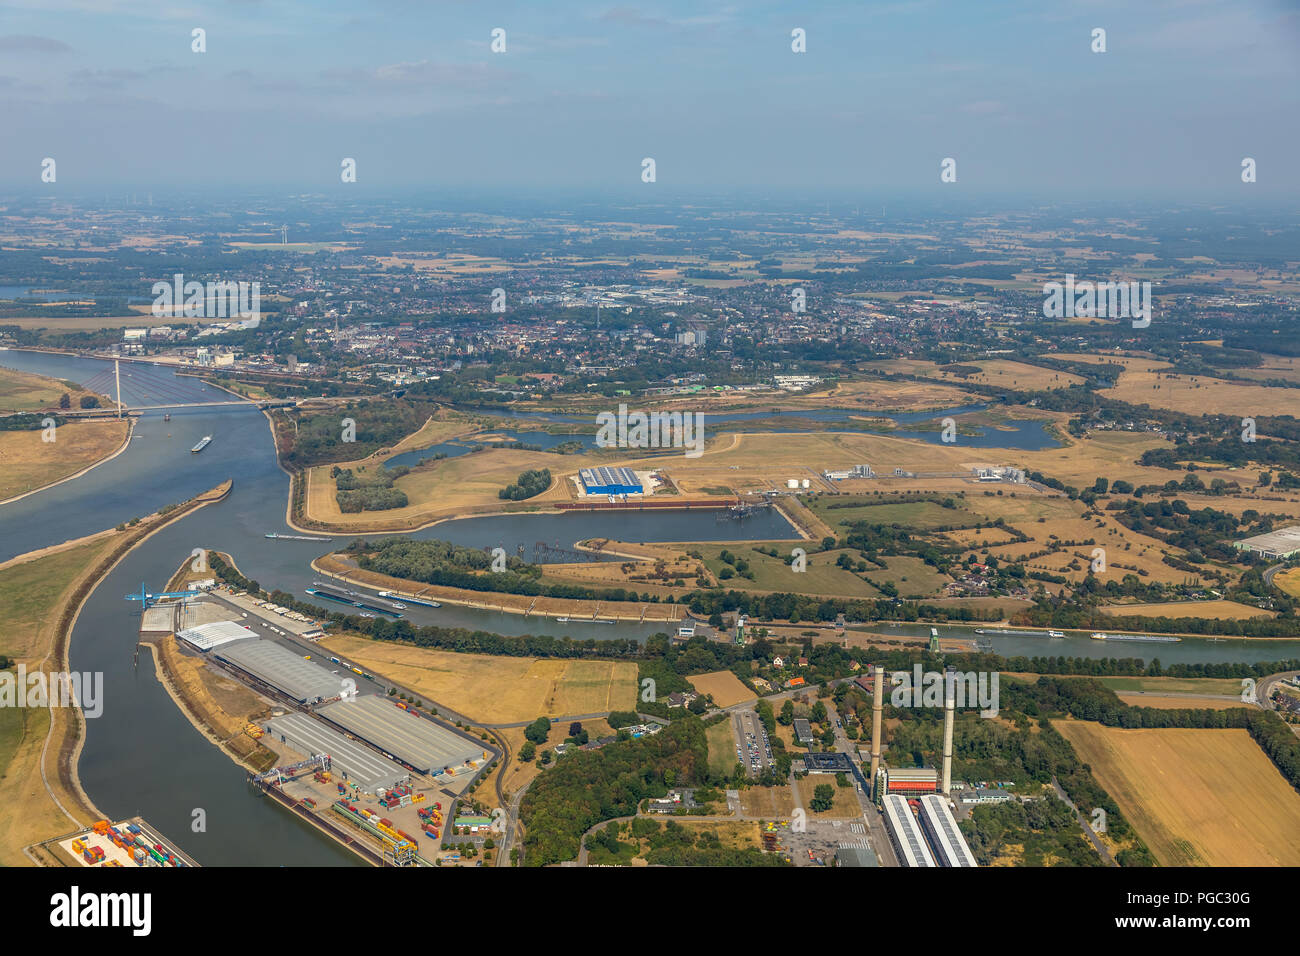 Neue Lippedelta, Lippemündung, River Lippe, Rhine river, Lippeverband, Wesel, Ruhr Area, Nordrhein-Westfalen, Germany, DEU, Europa, aerial photograph, Stock Photo